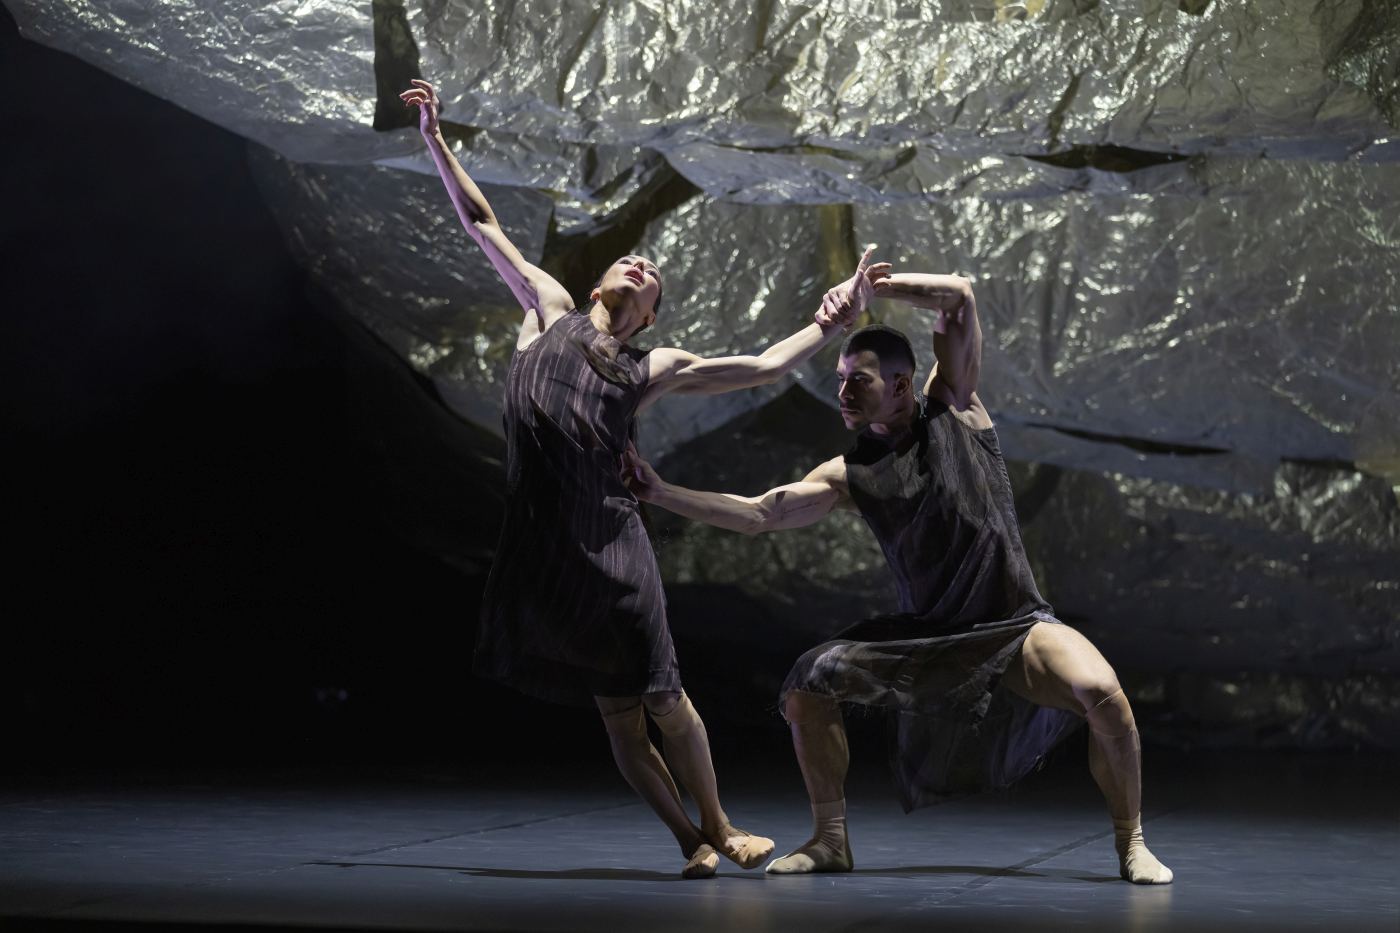 2. D.Vishneva (Maria) and L.Axel, “Maria” by G.Montero, Ballet of the State Theater Nuremberg 2022 © J.Vallinas